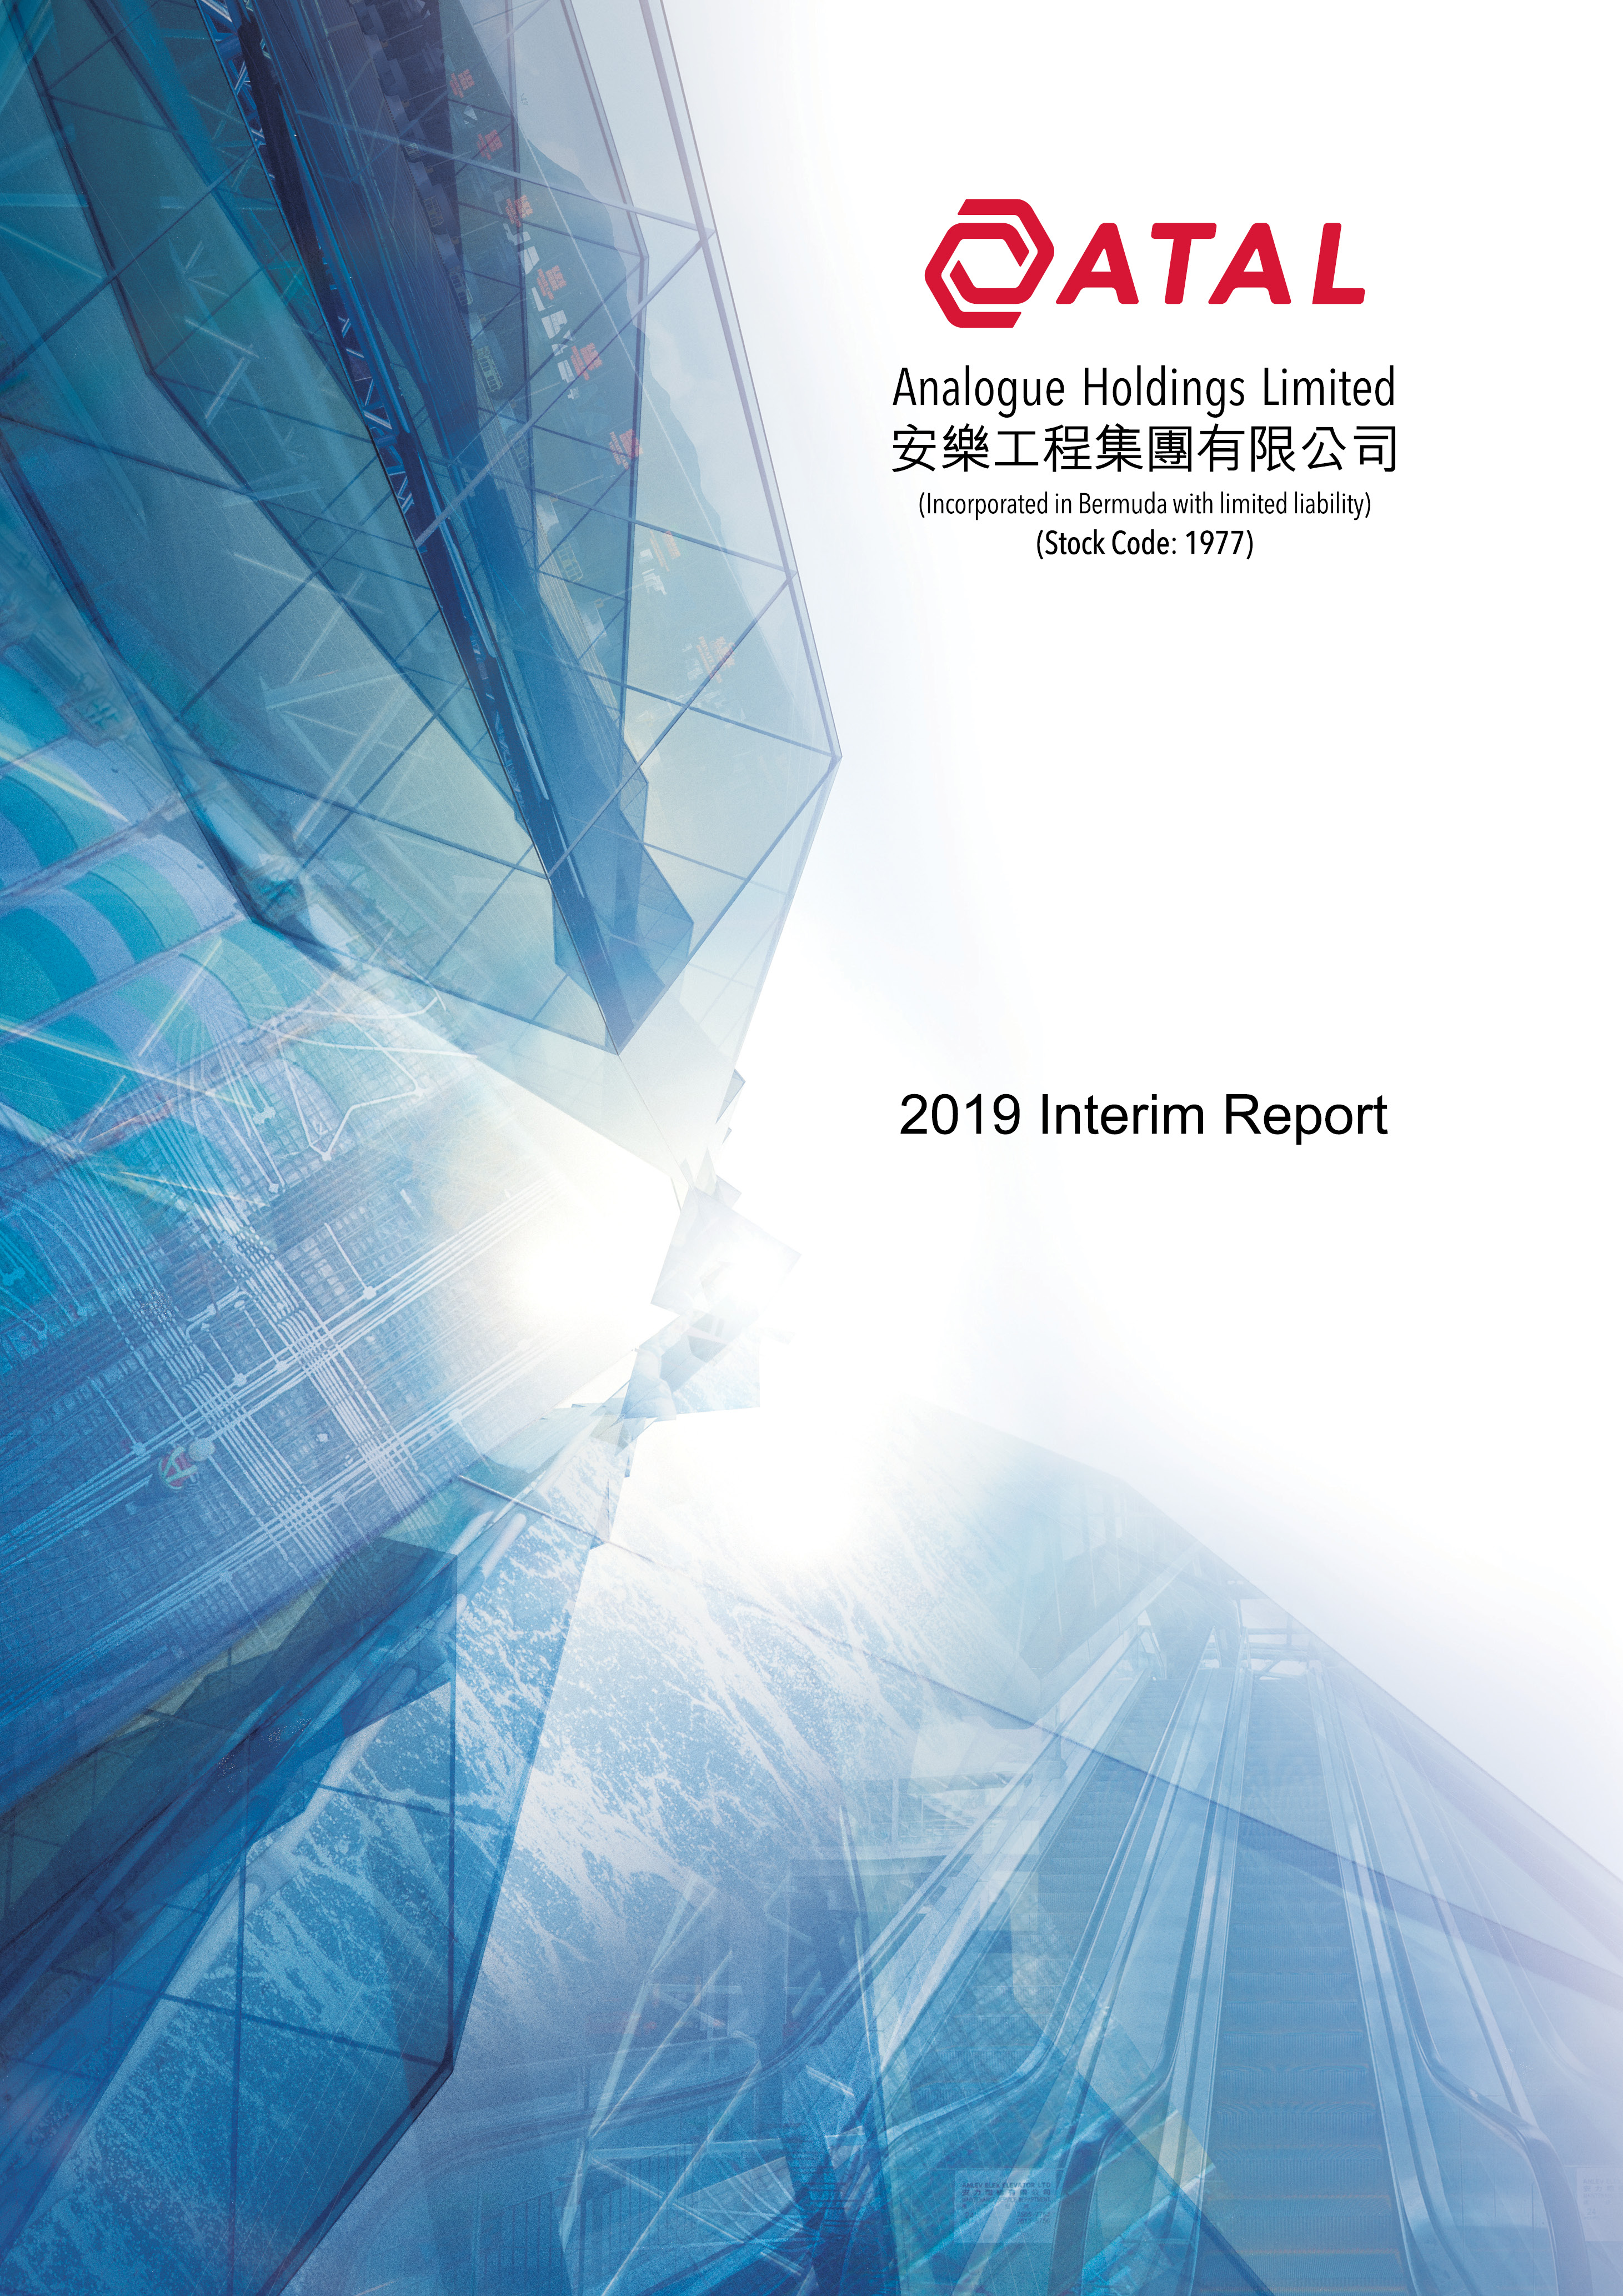 Interim Report 2019